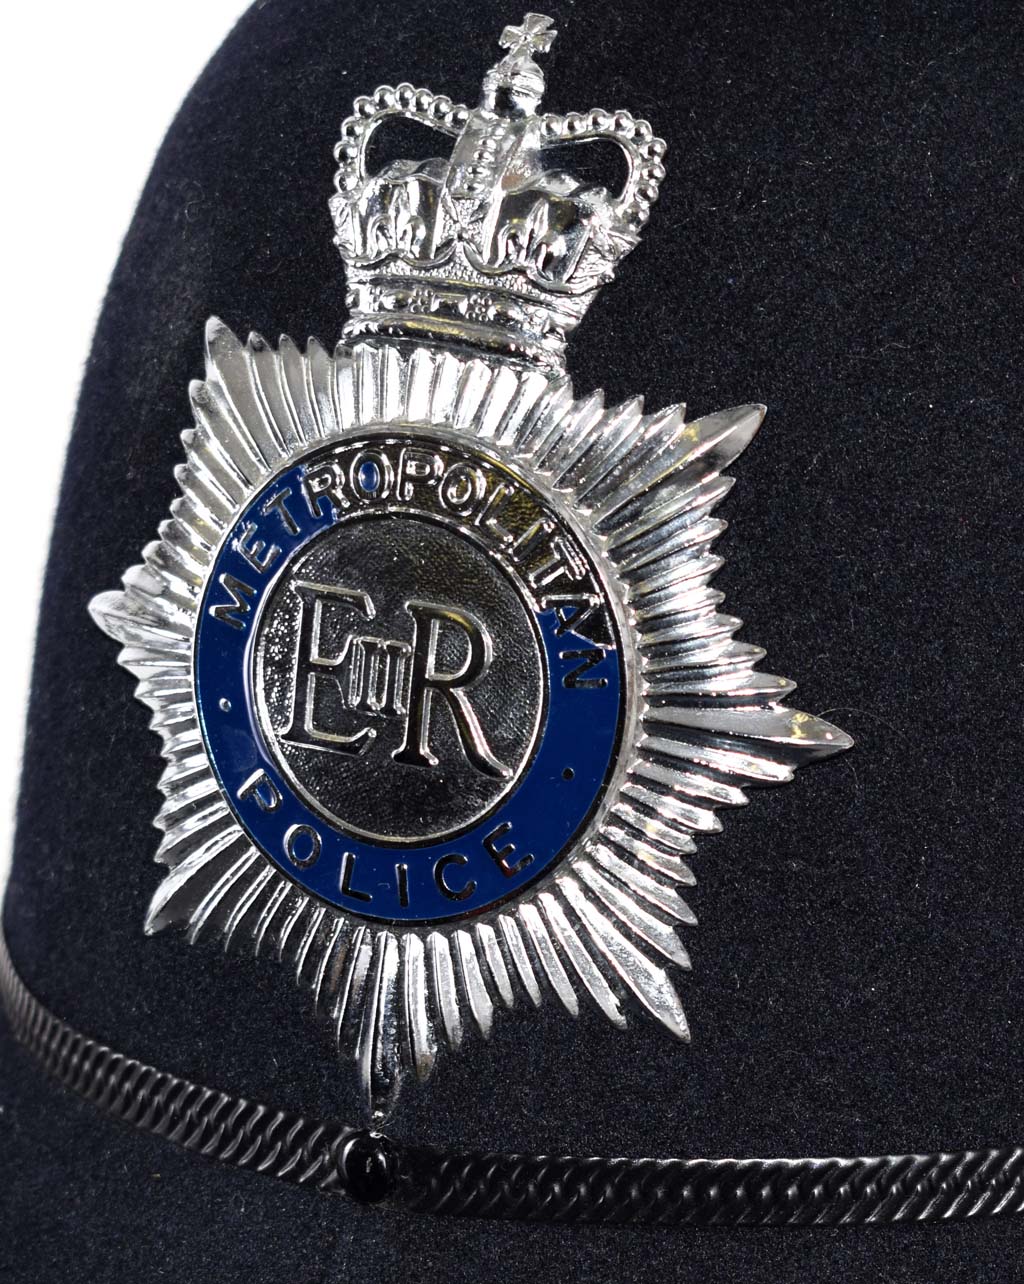 Шлем полицейский METROPOLITEN б/у Англия